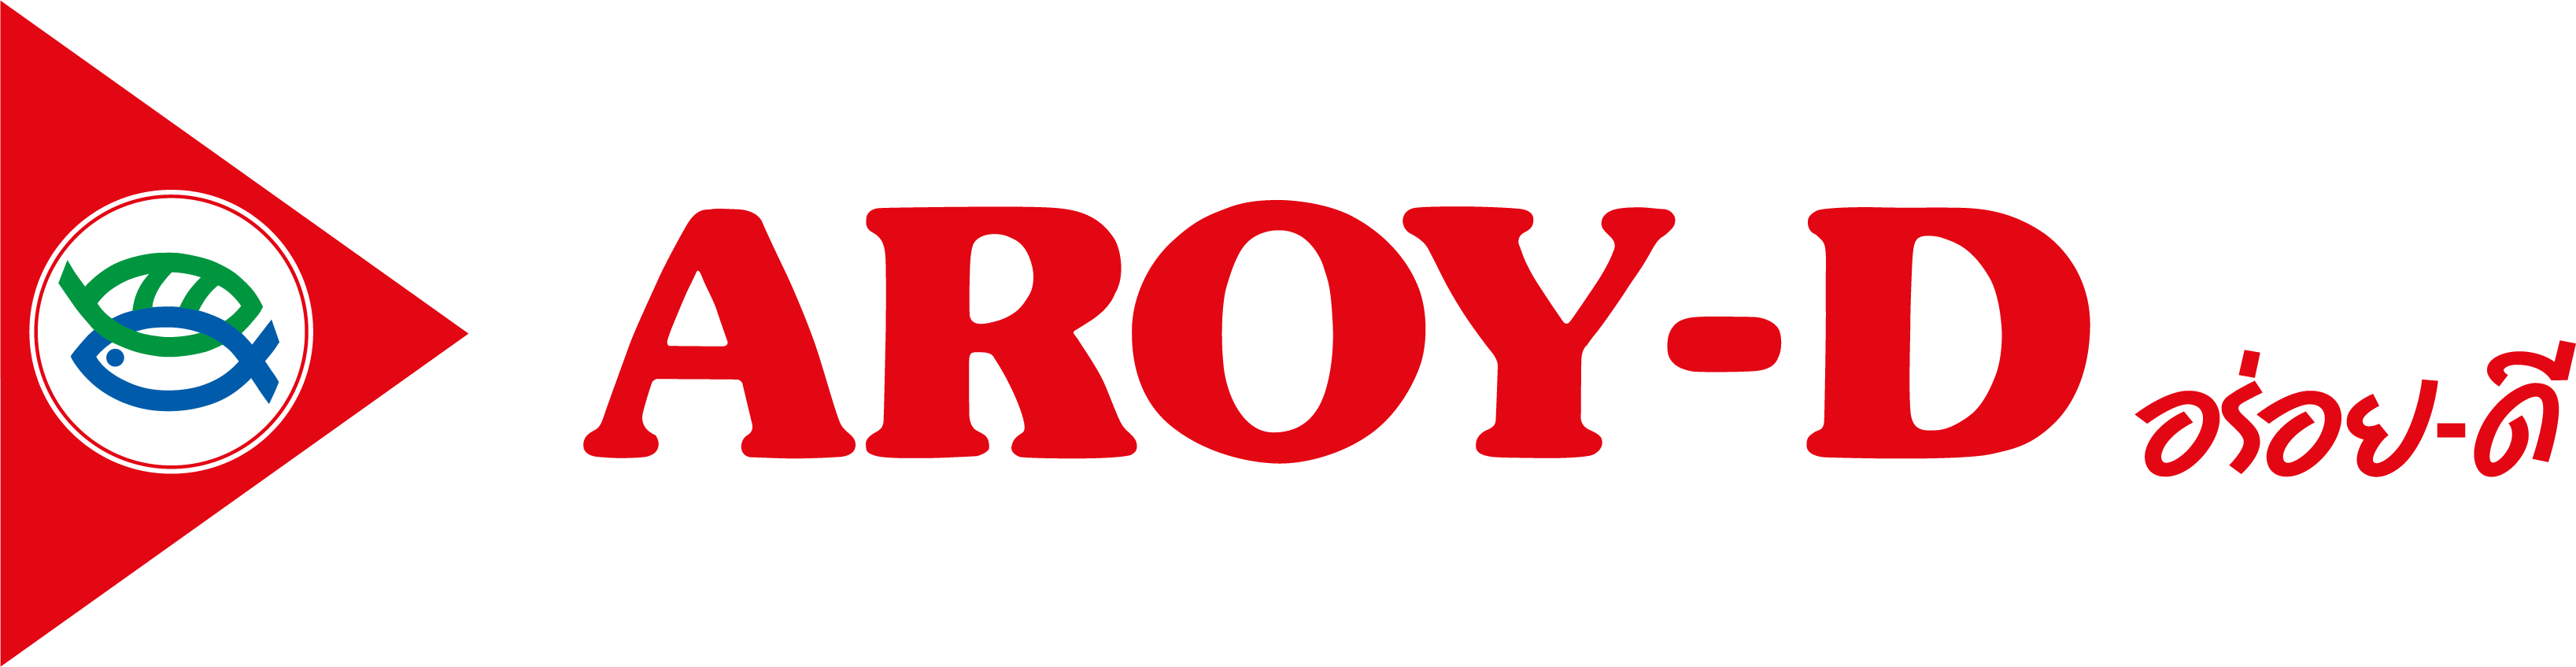 Aroy-D